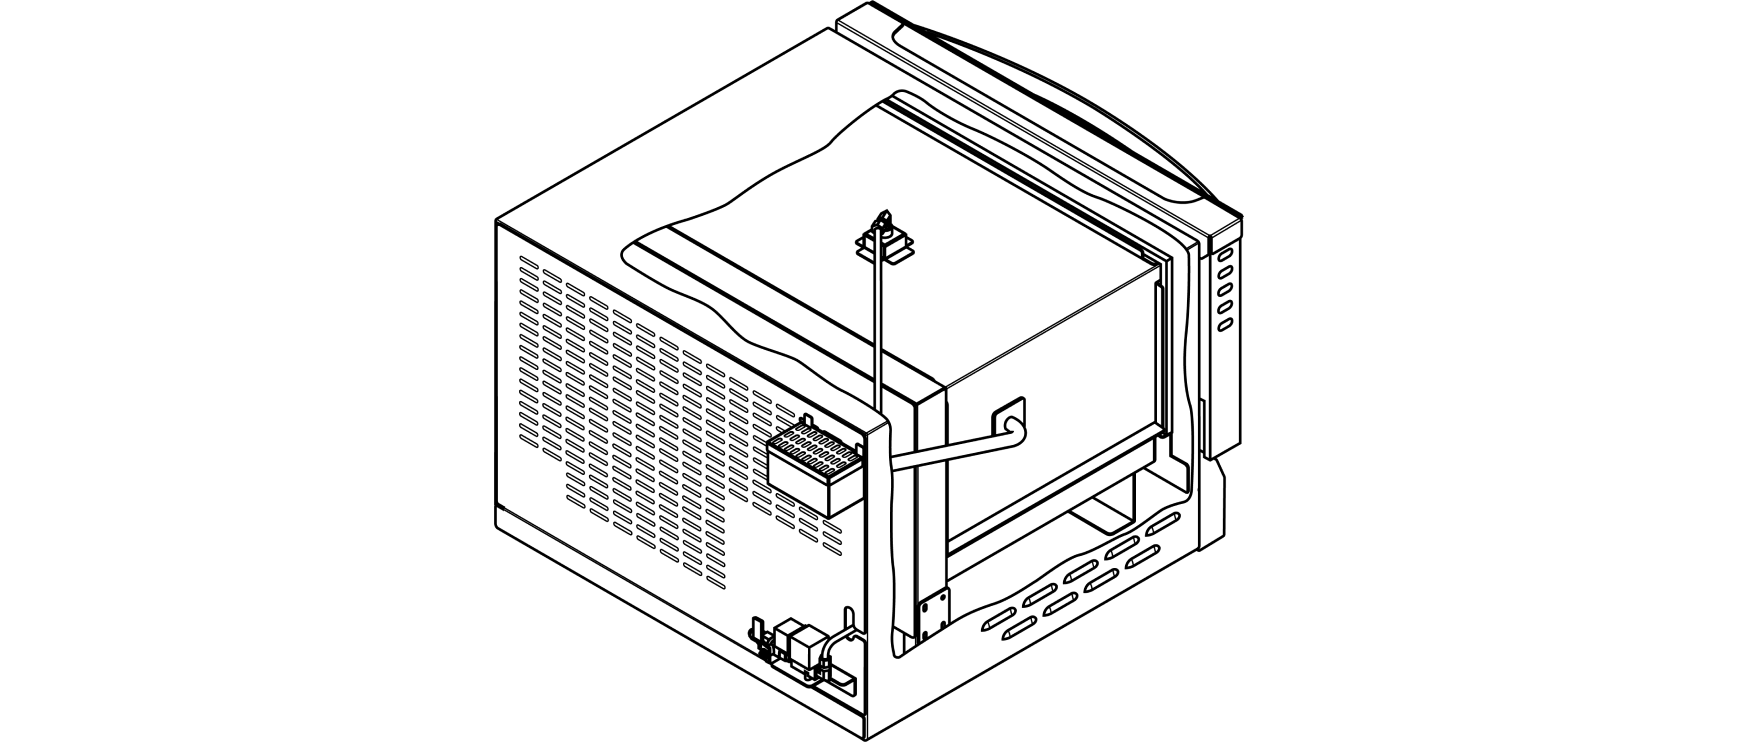 Mini-series product drawing image